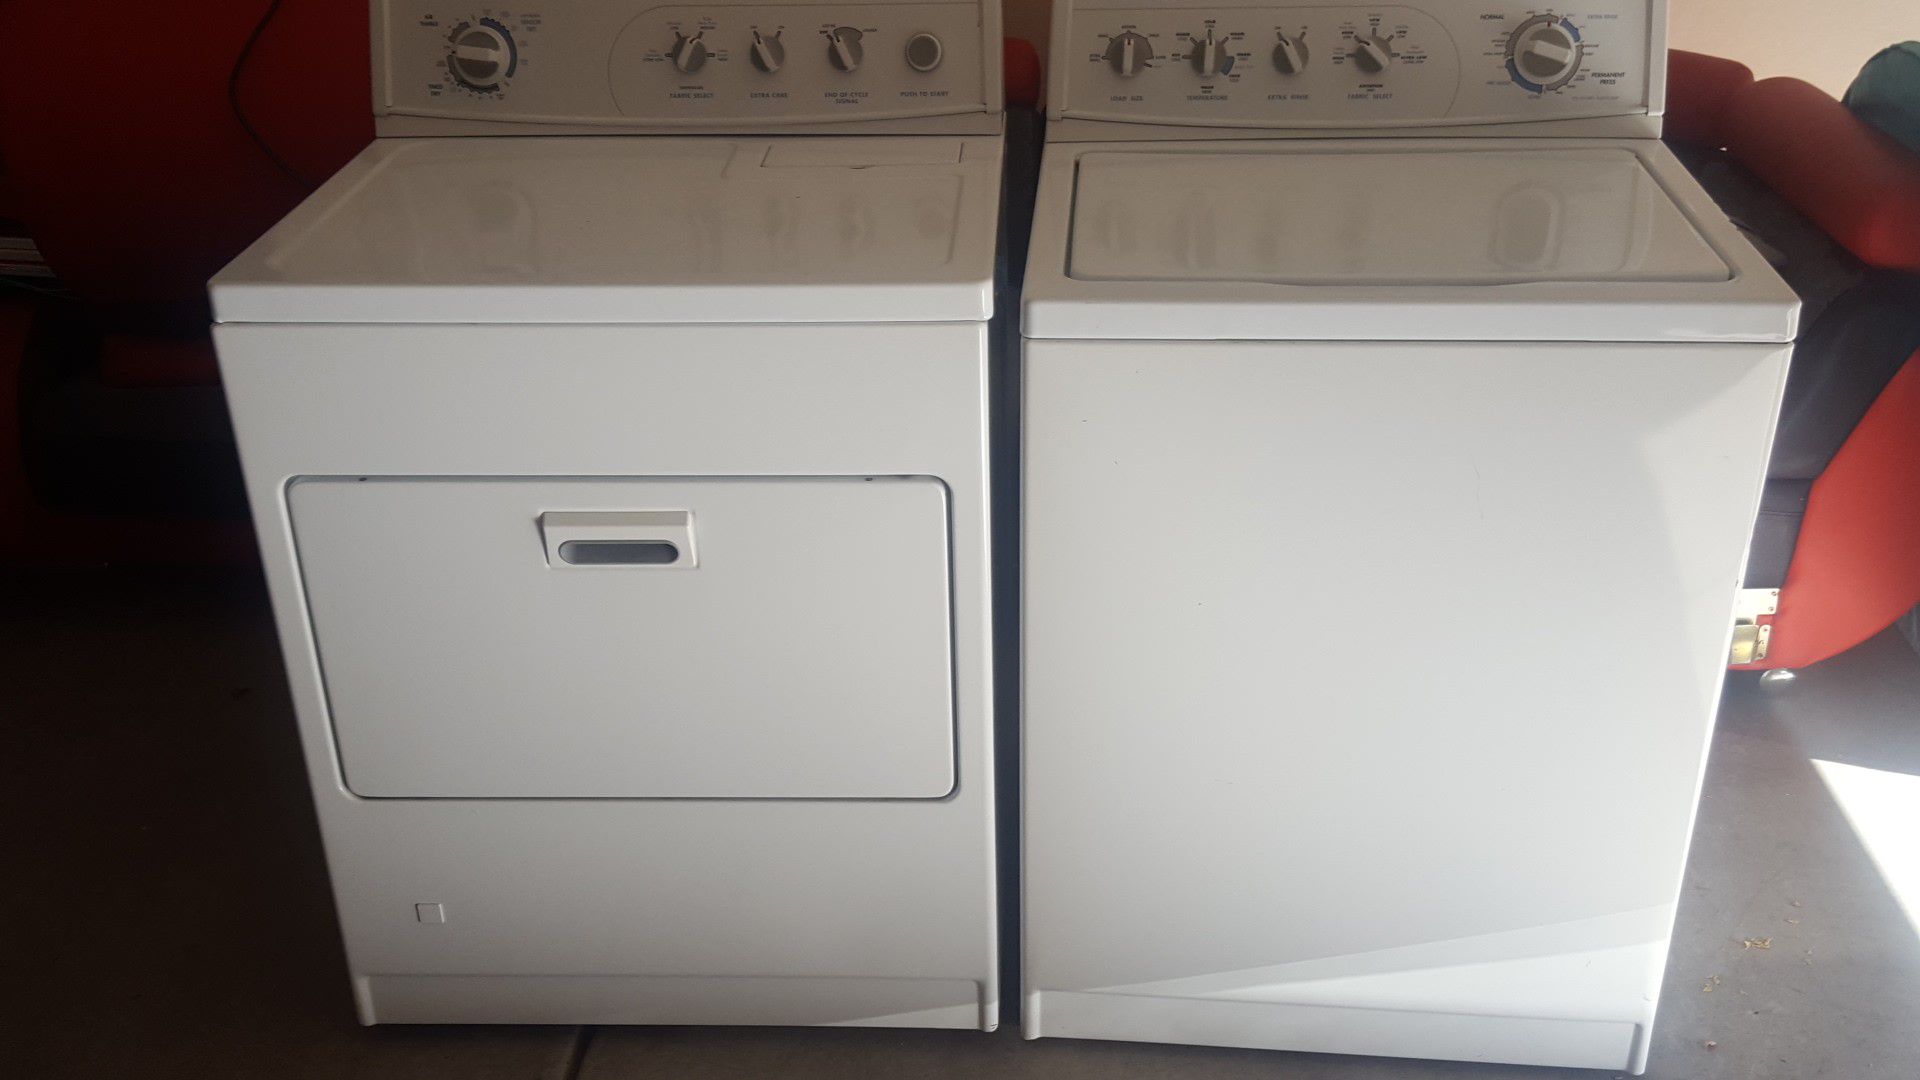 KitchenAid washer and dryer